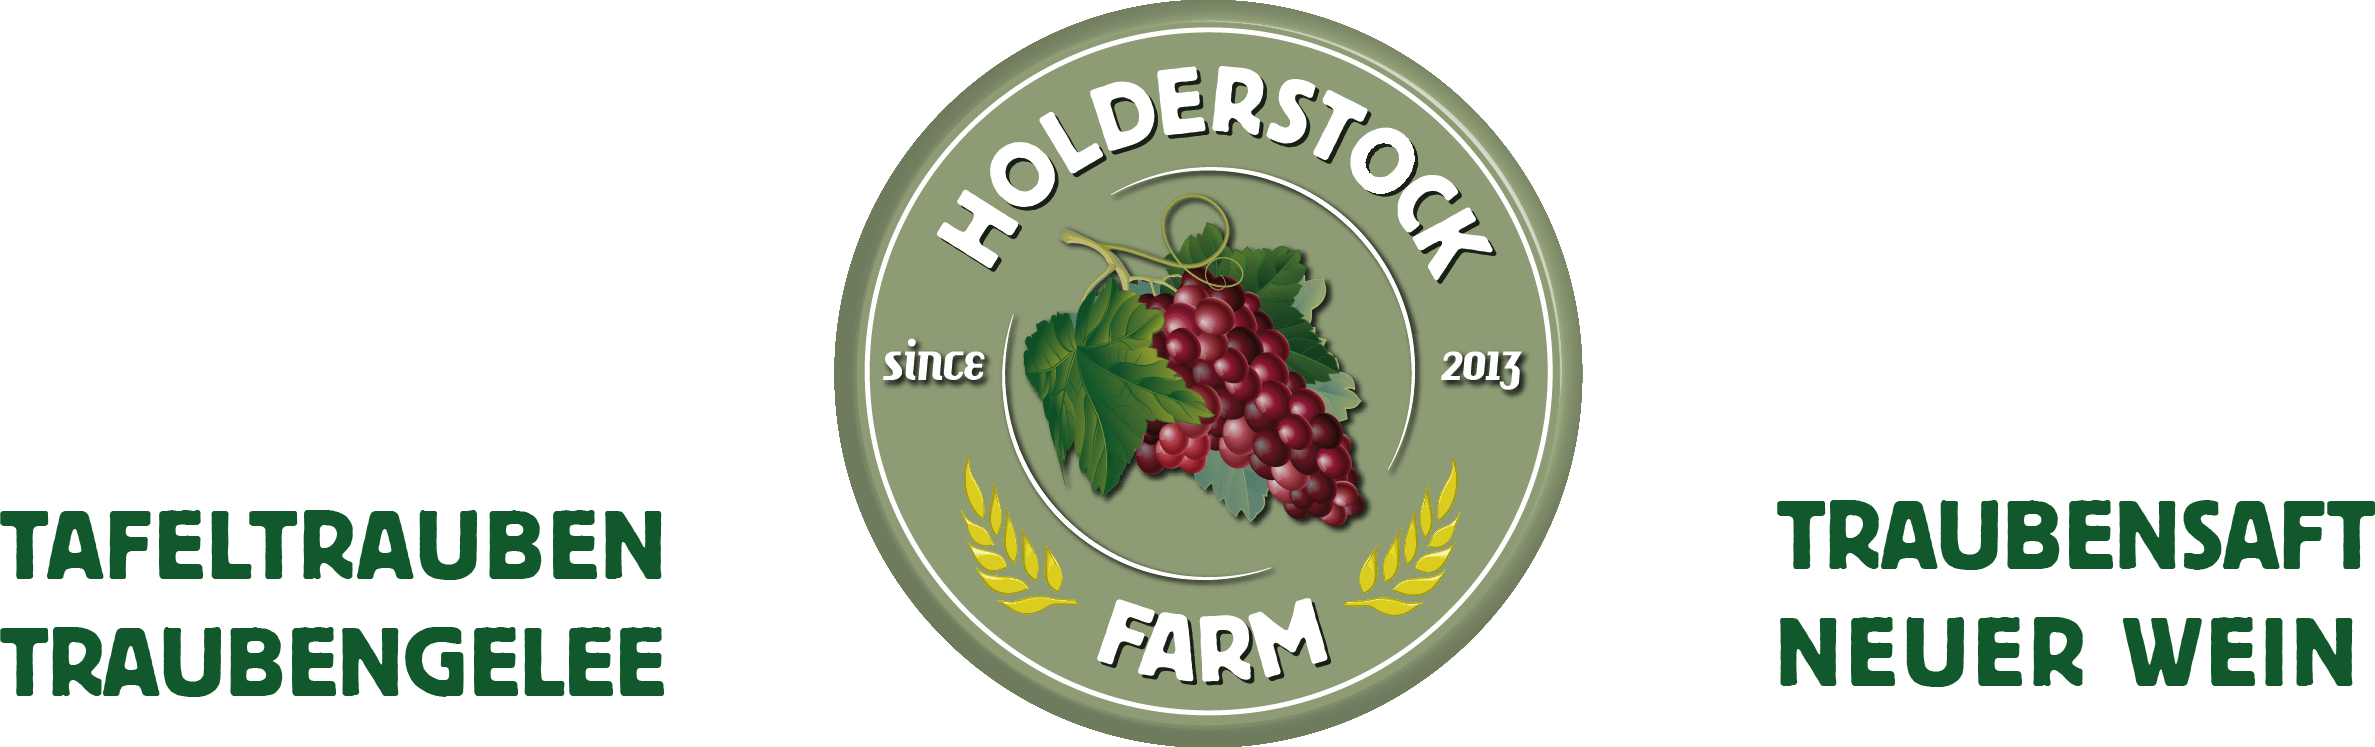 HOLDERSTOCK FARM